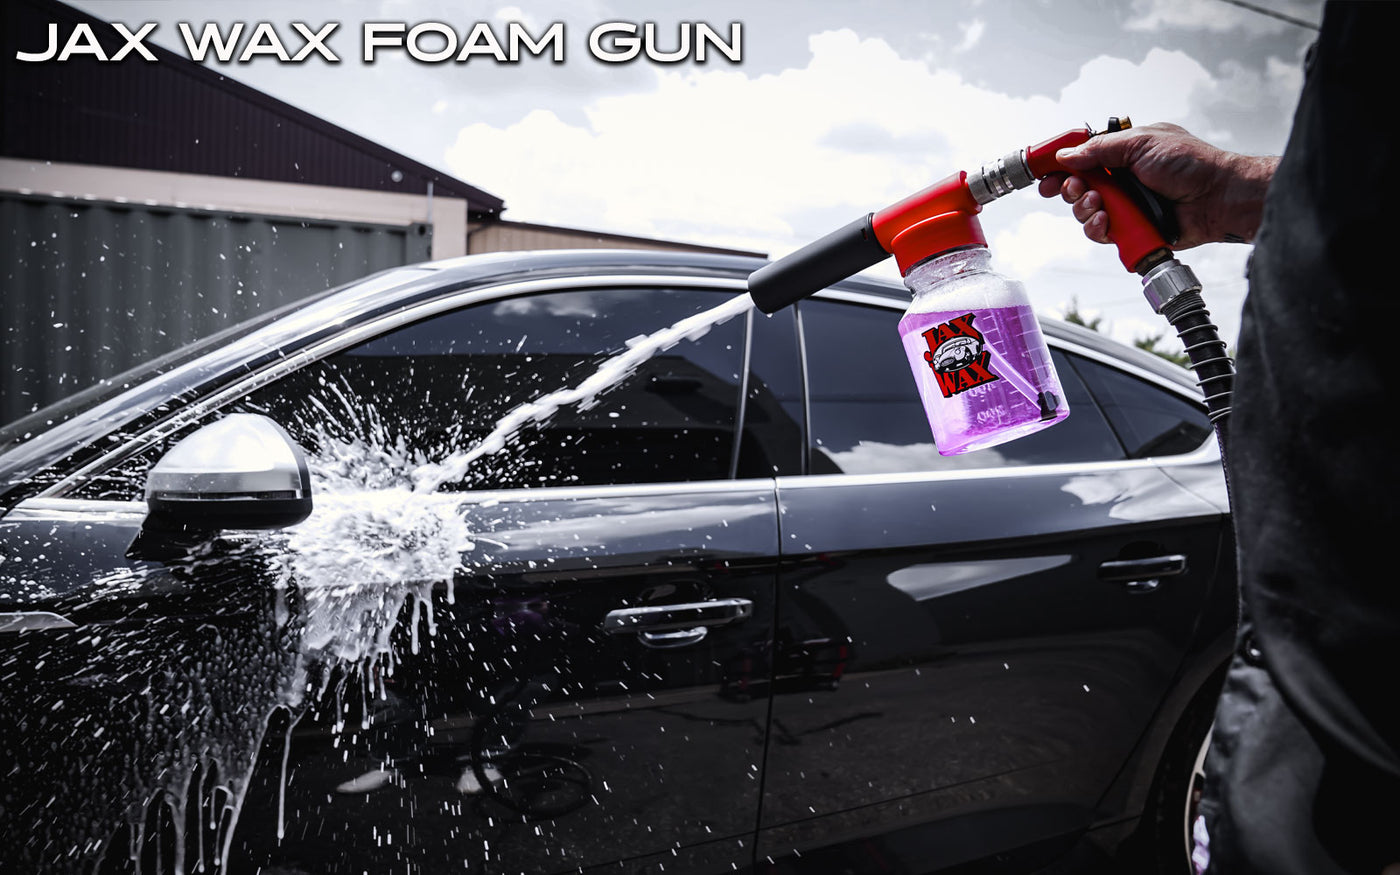 The ULTIMATE Car-Wash FOAM GUN